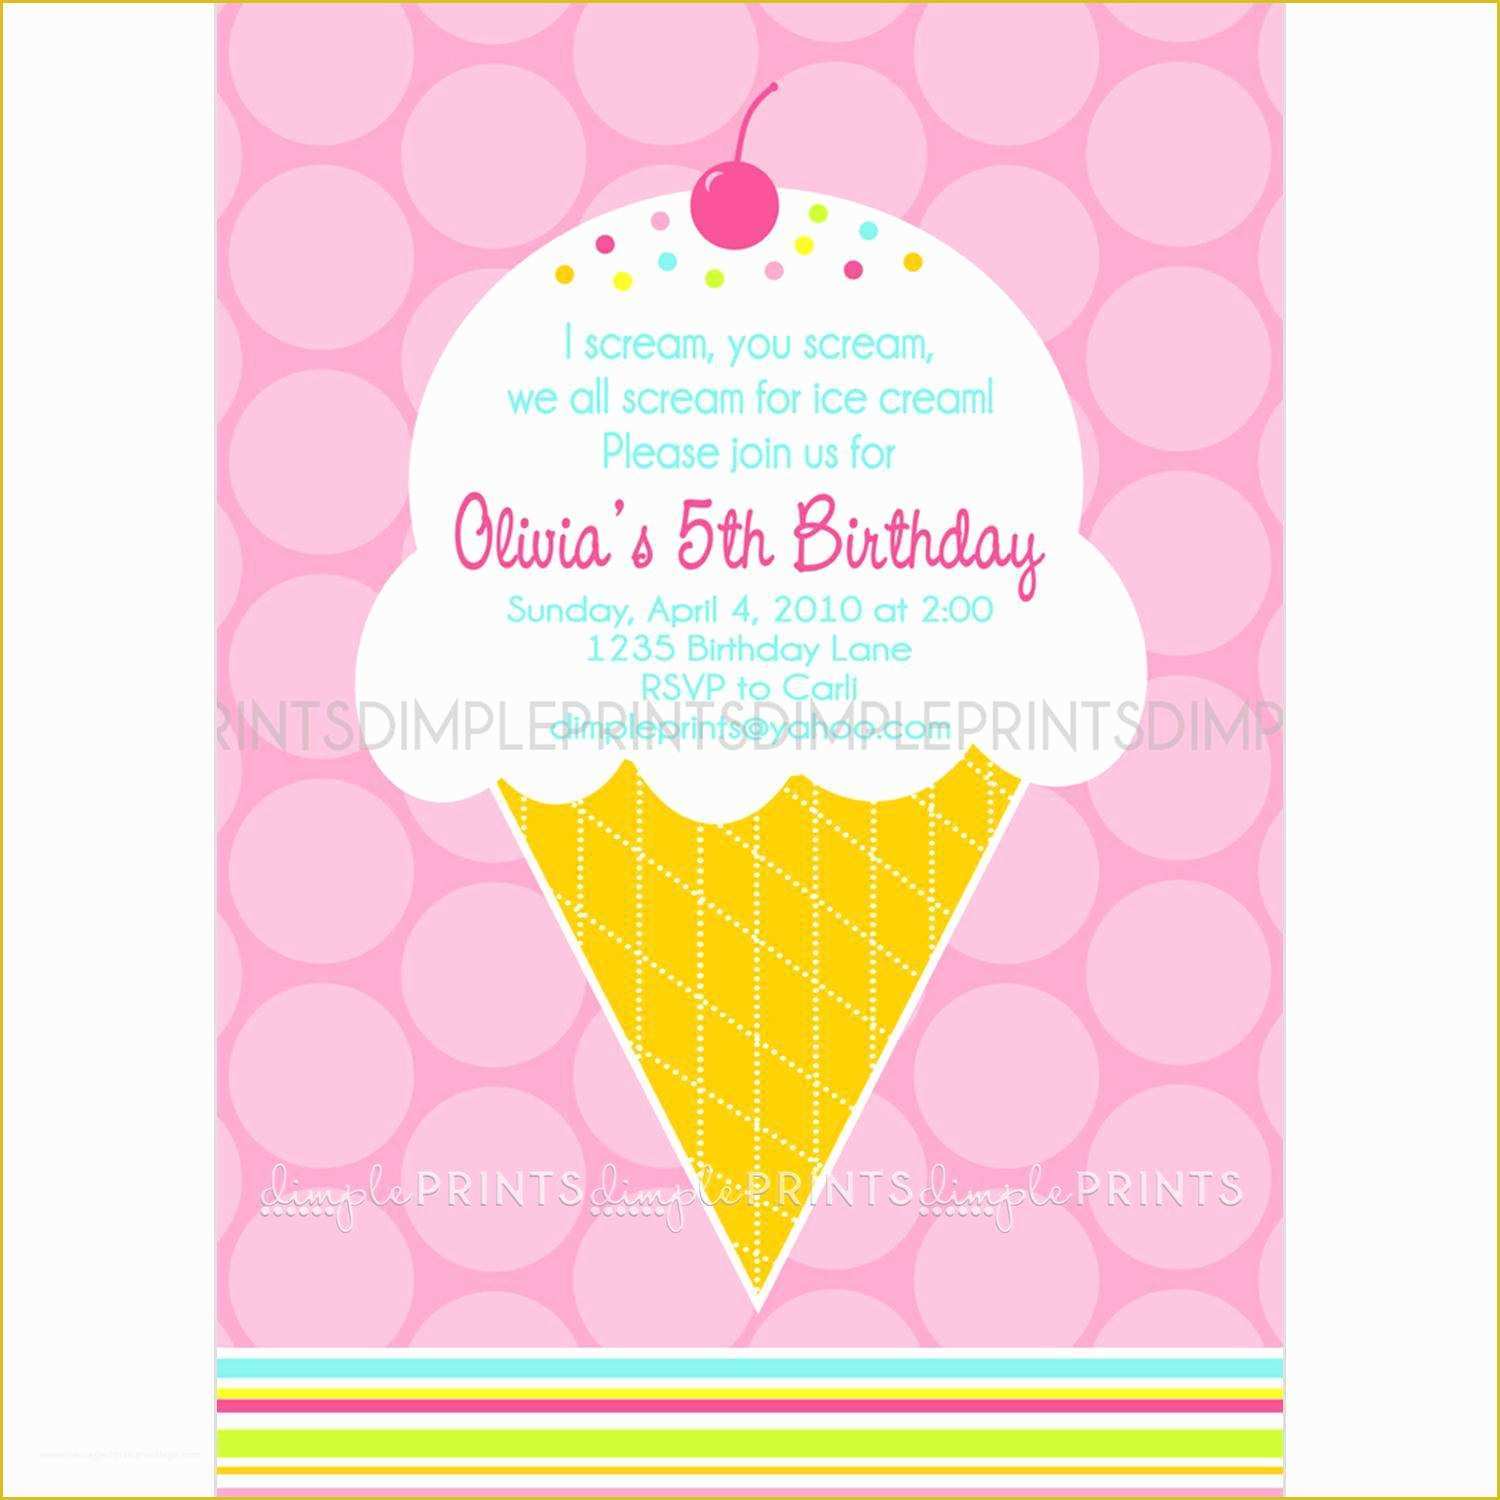 Ice Cream Birthday Invitation Template Free Of Ice Cream Party Invitations